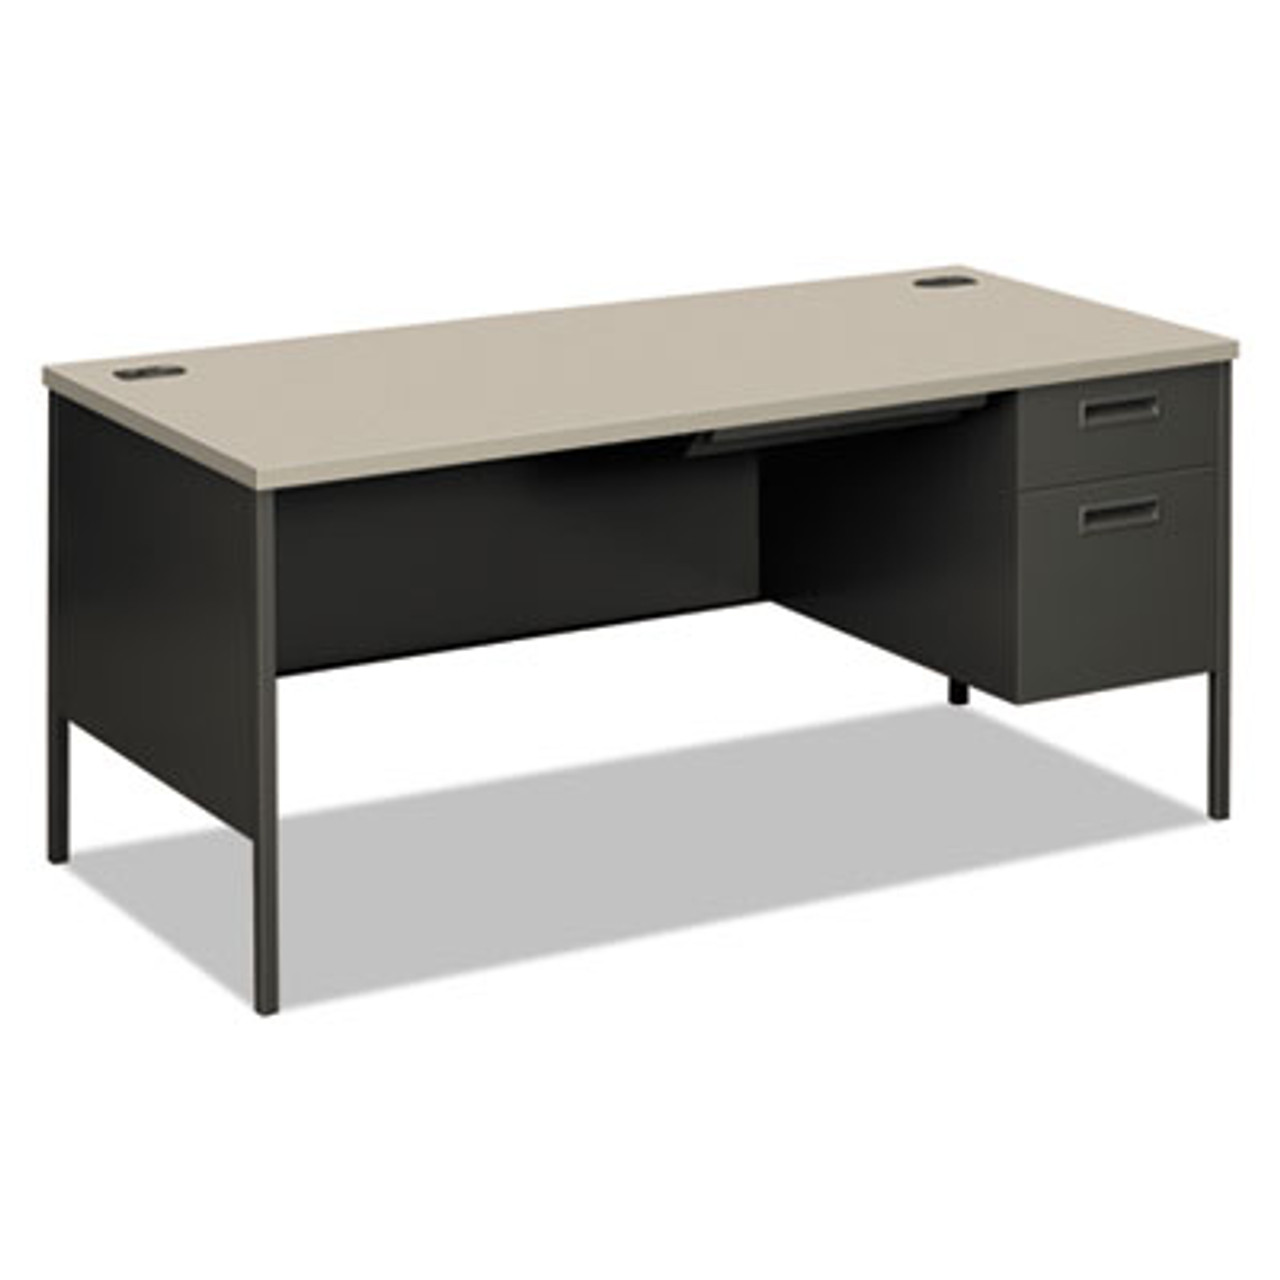 Metro Classic Right Pedestal Desk, 66w x 30d, Gray Pattern/Charcoal